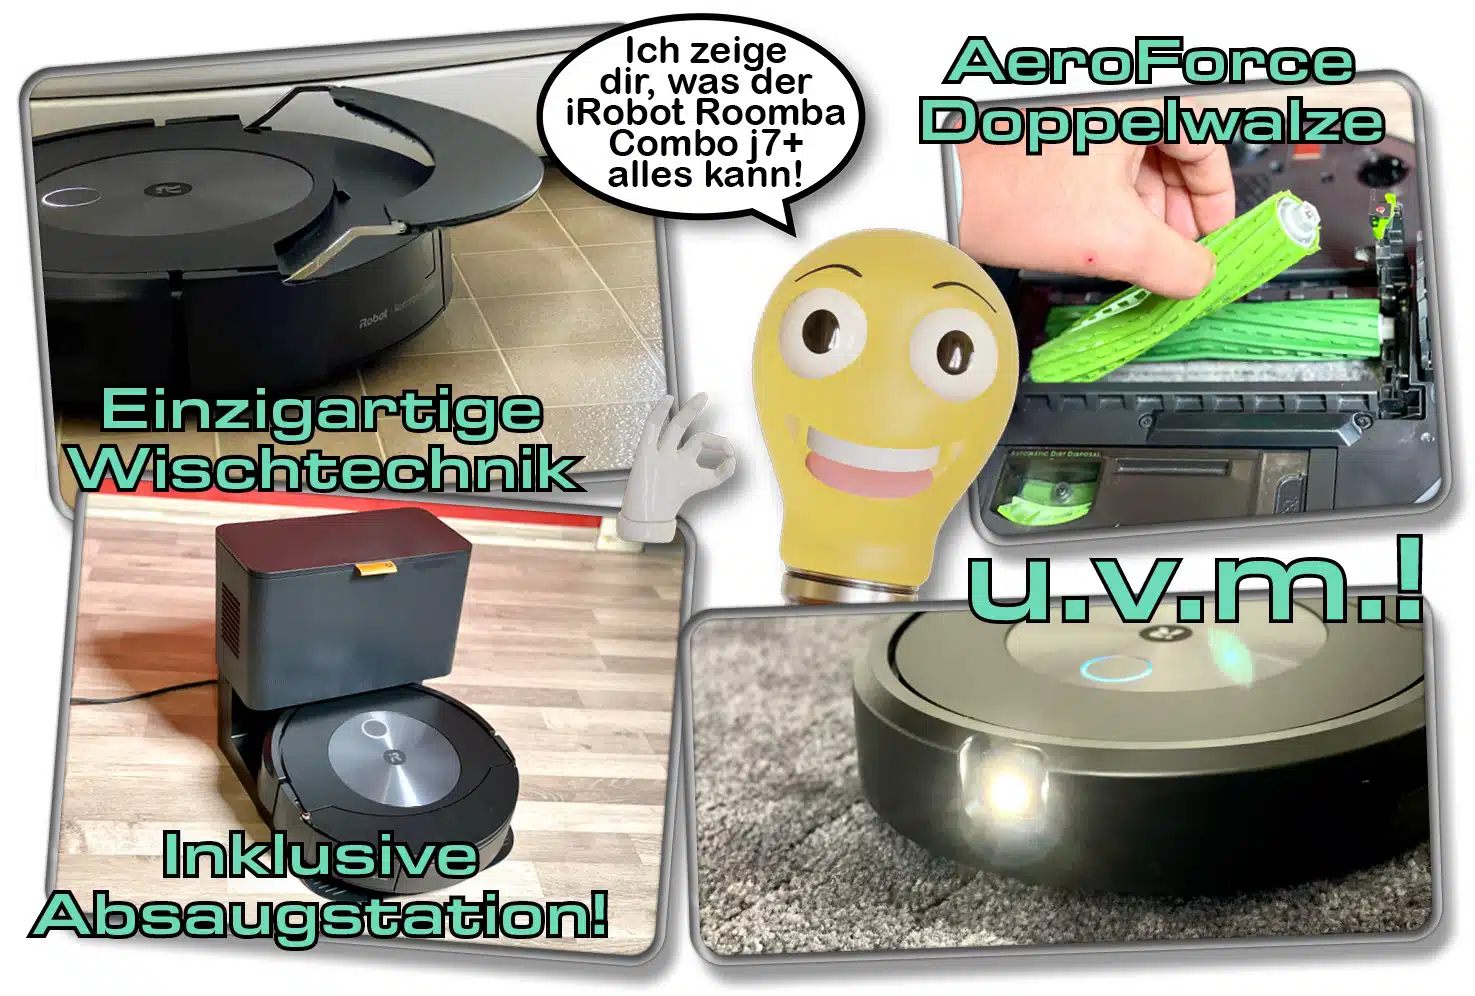 iRobot Roomba Combo j7+ - Wir haben das Spitzenmodell mit innovativem Mopp-Lift-System getestet!